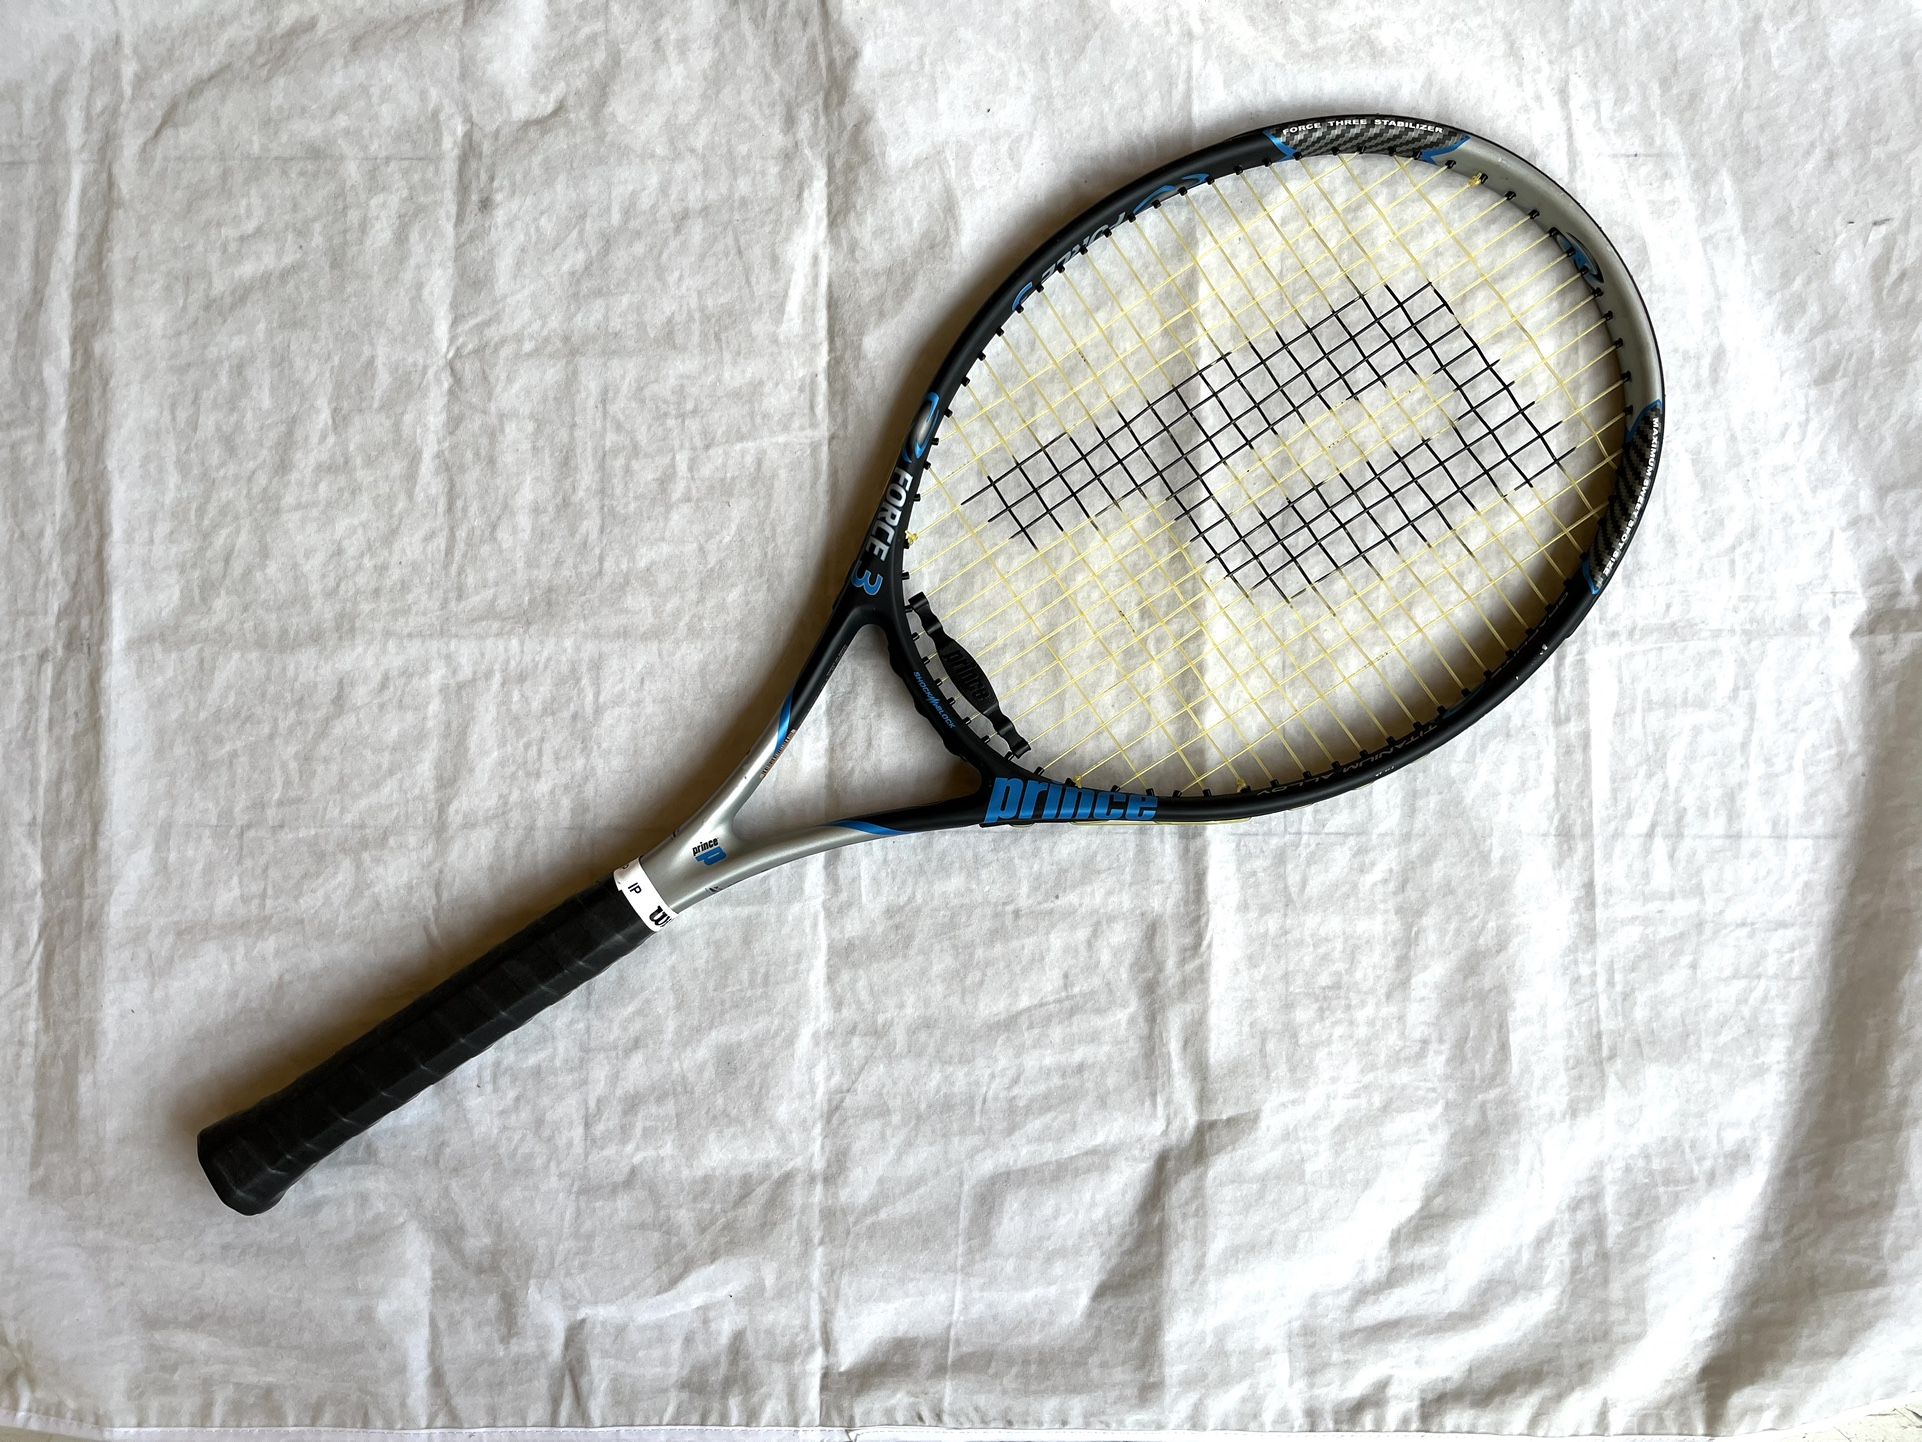 Prince Force 3 Blast Oversize Tennis Racquet / Racket - PRICE FIRM